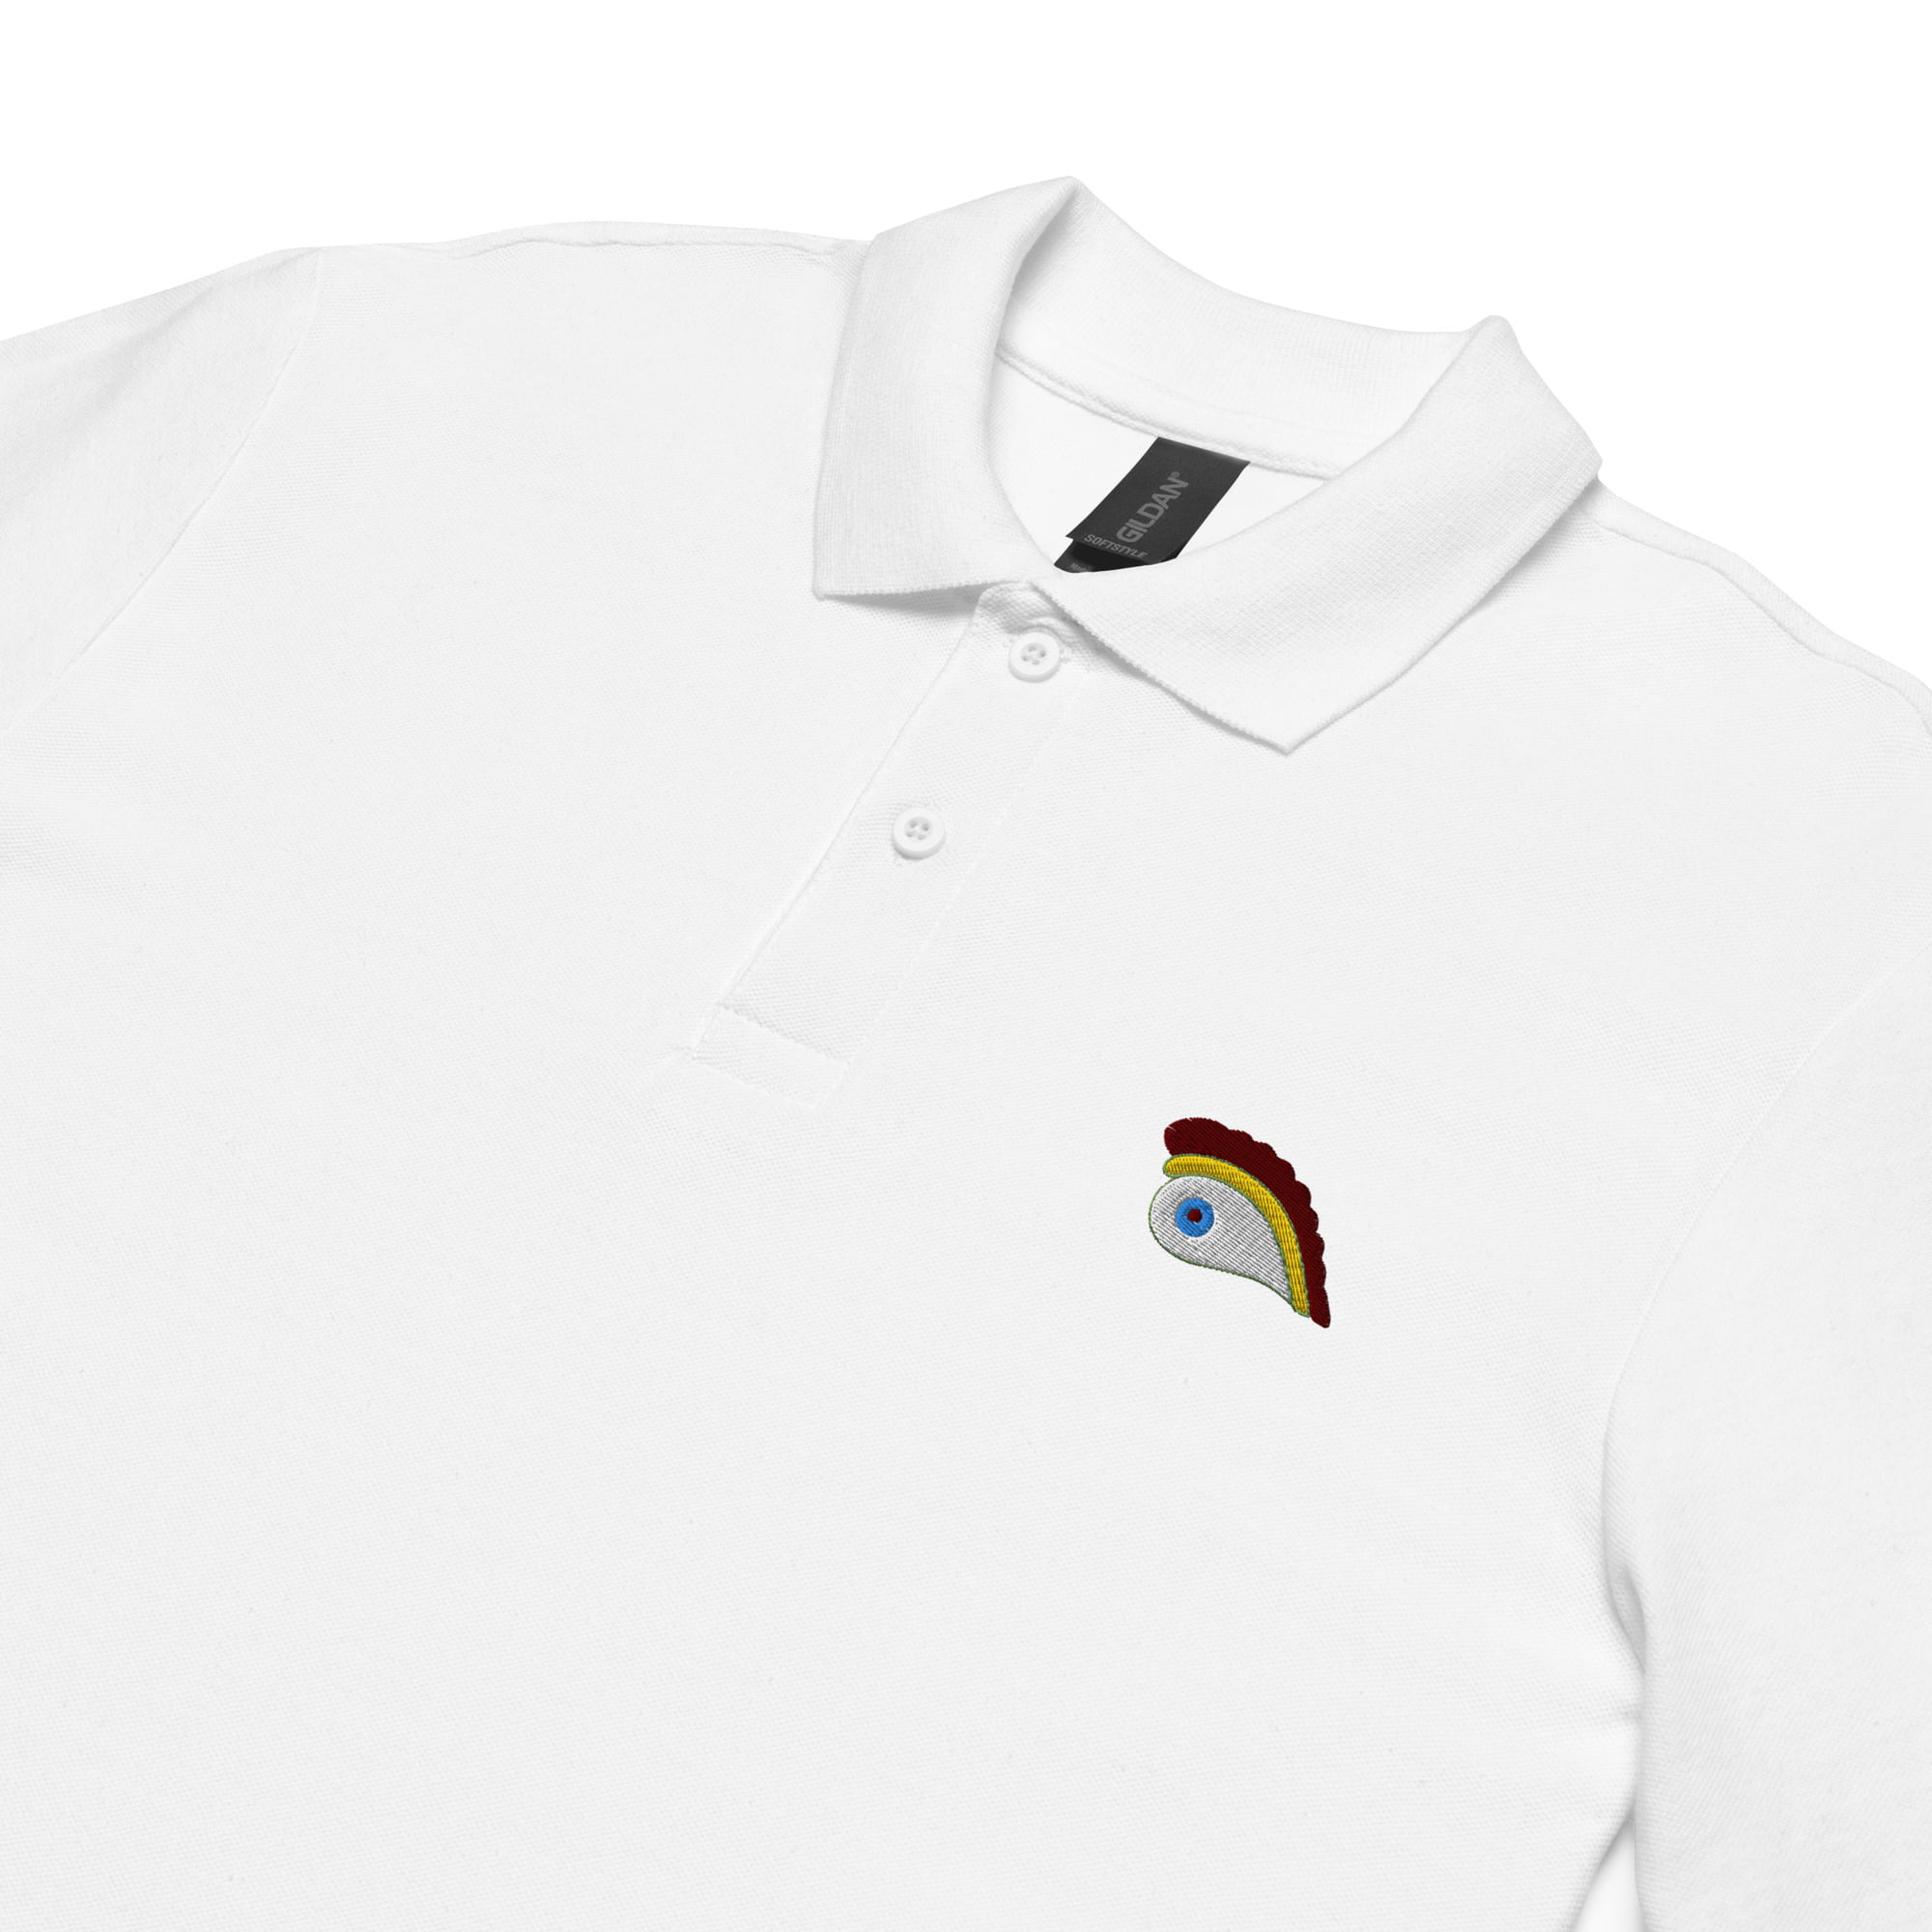 unisex pique polo shirt white product details 6475a0ab86656